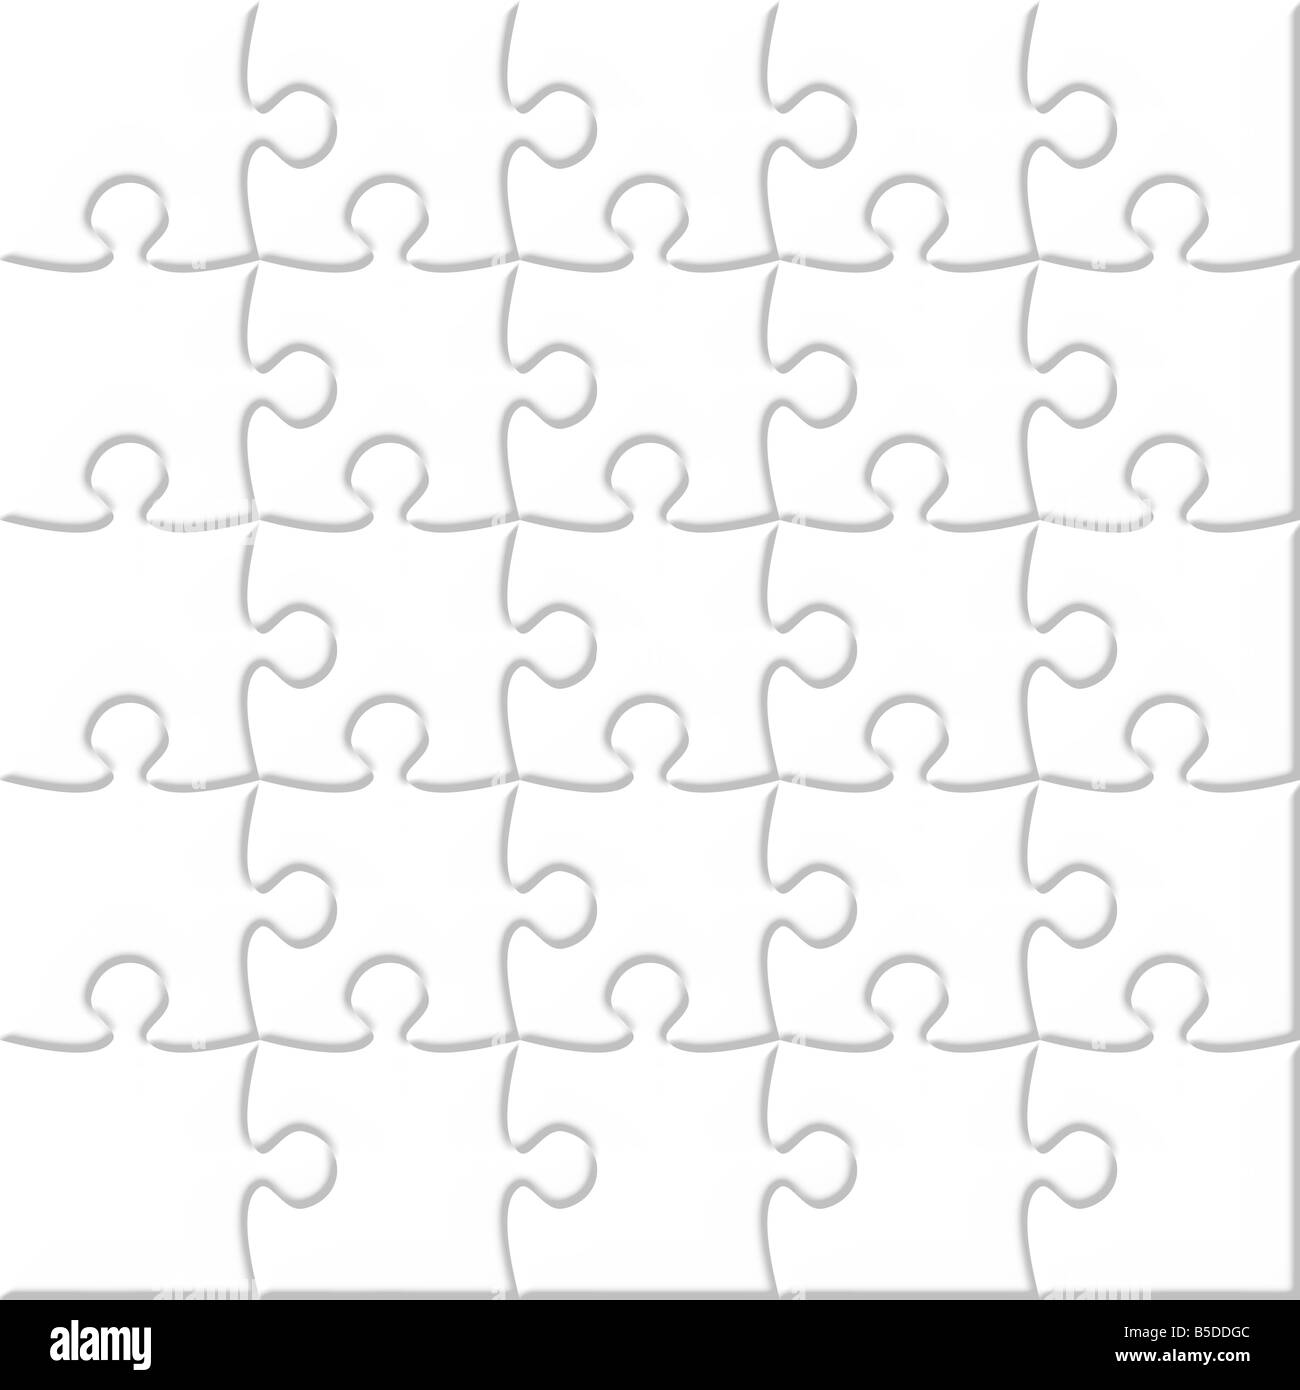 Blank 3d 5x5 puzzle Stock Photo - Alamy